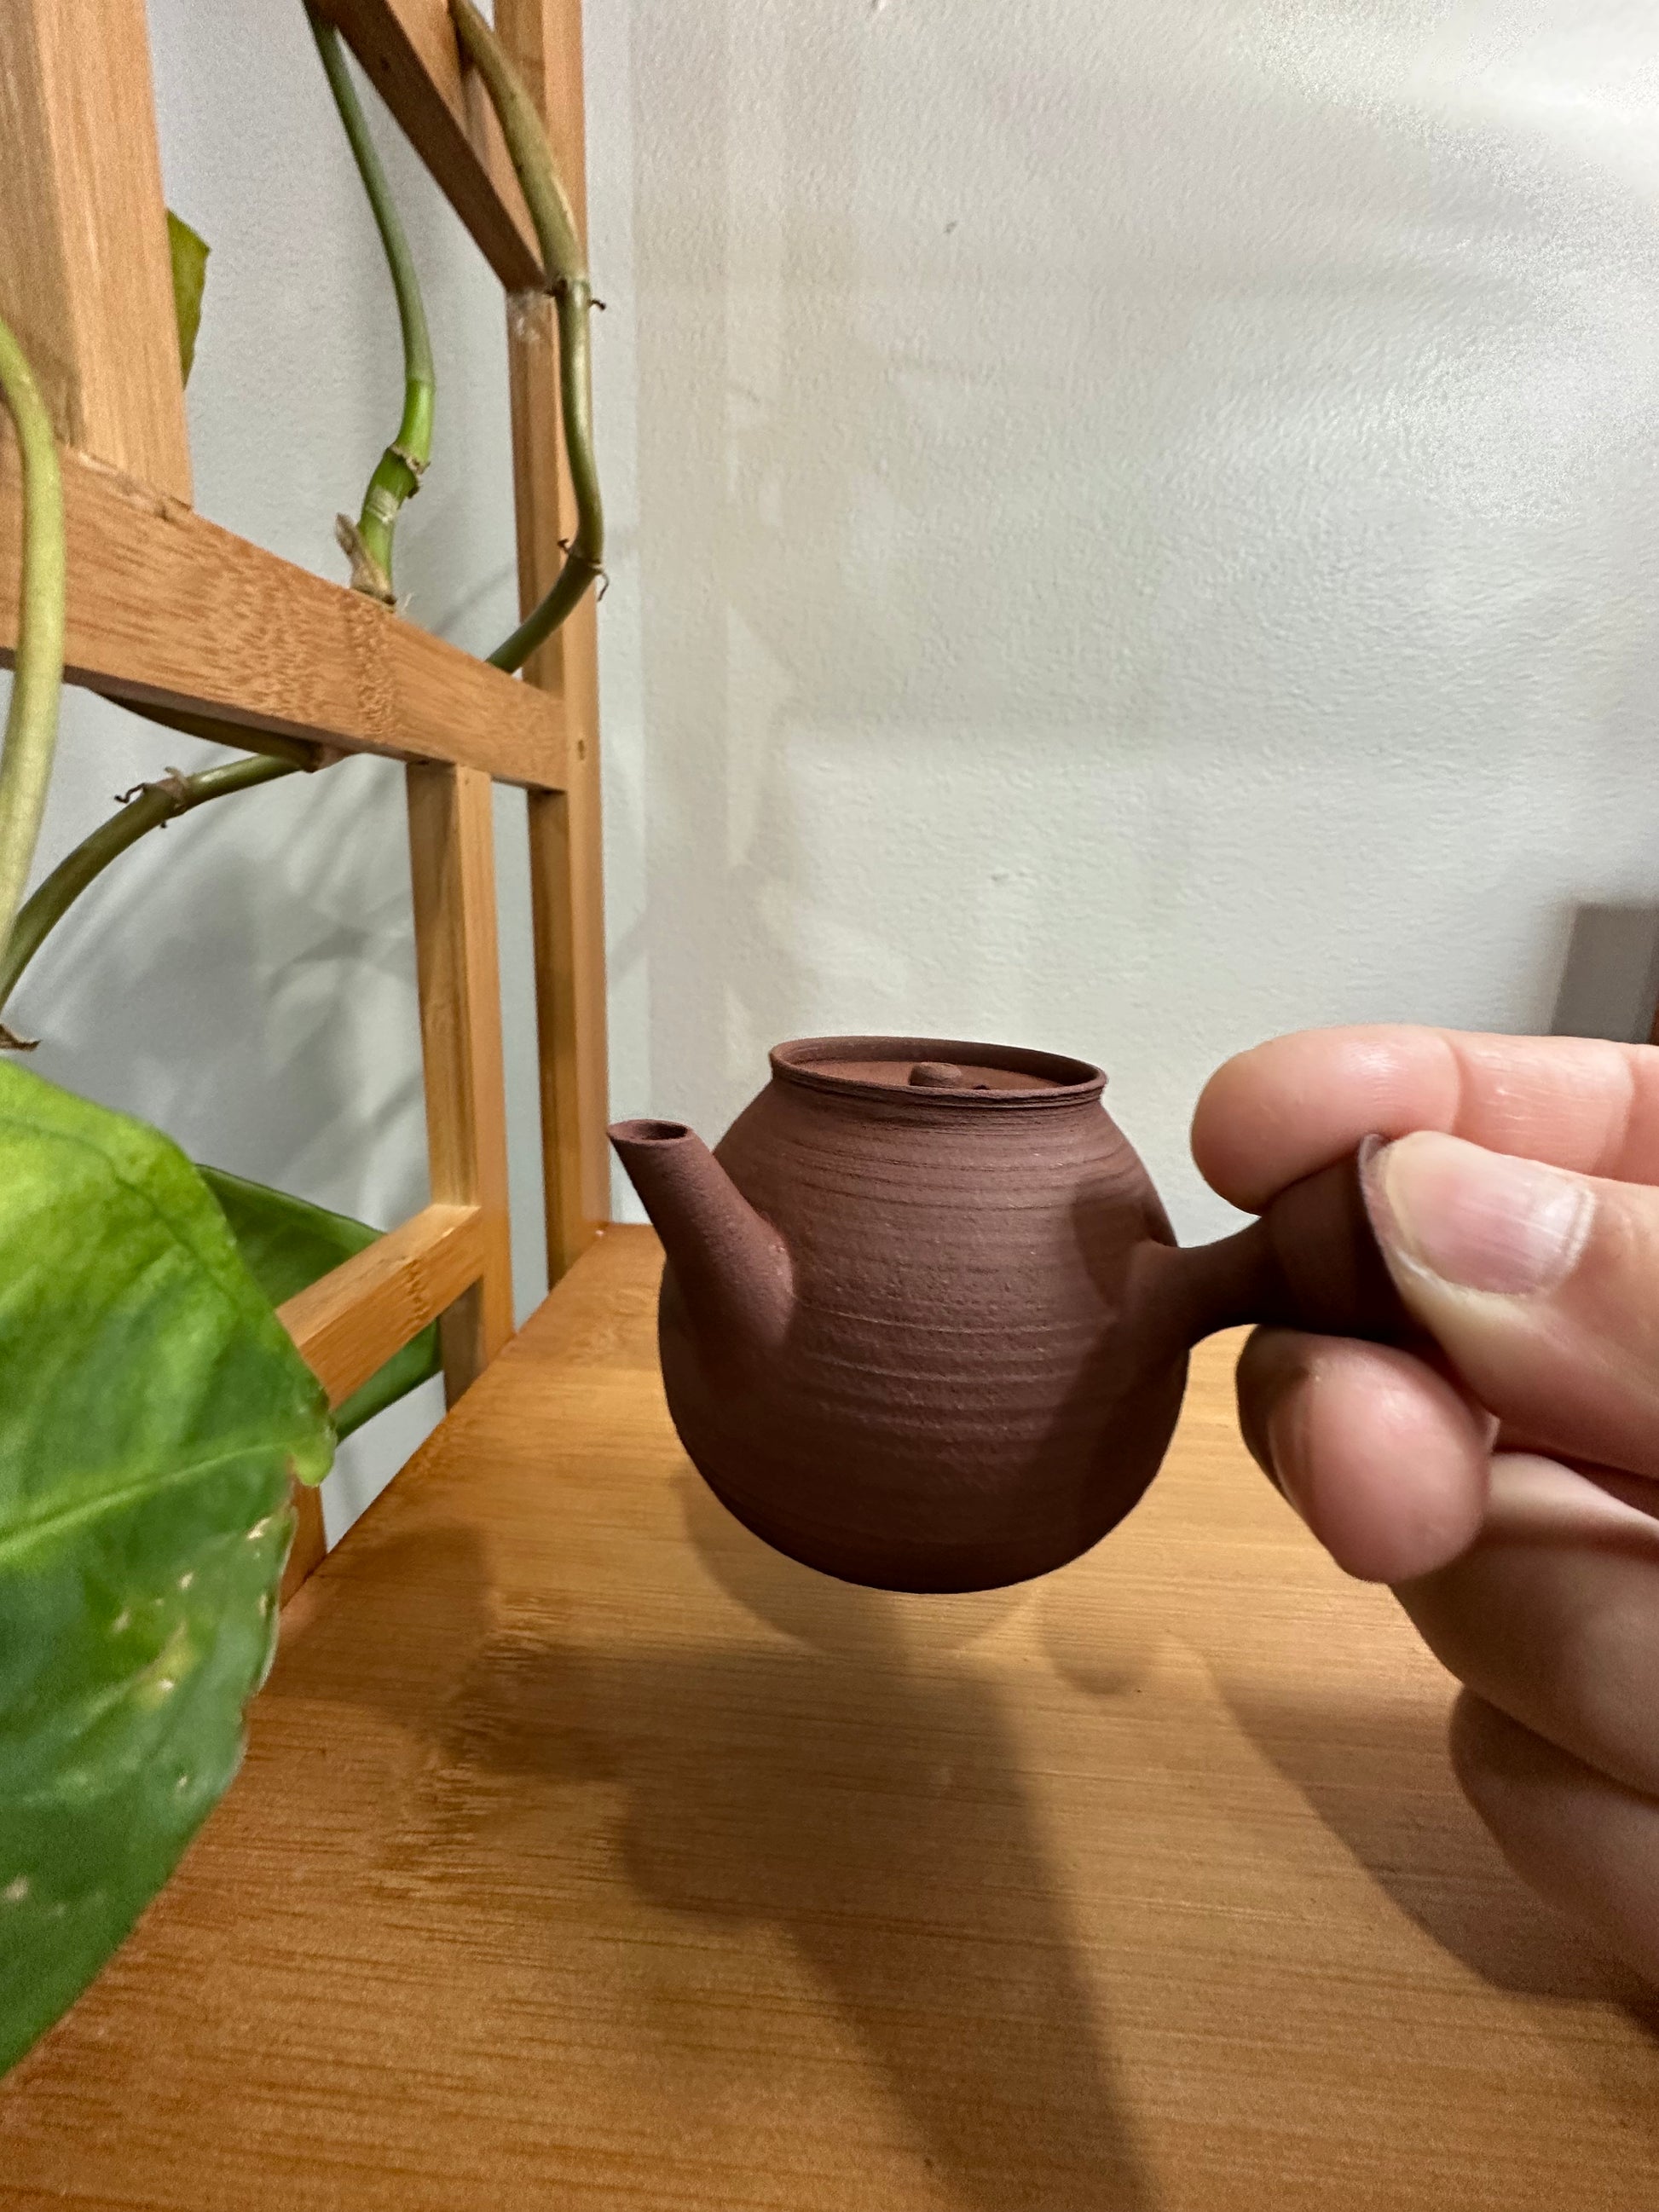 纯手工潮州手拉侧把壶 钟玉鹏作品 Pure handmade Chaozhou side handle teapot 茶壶